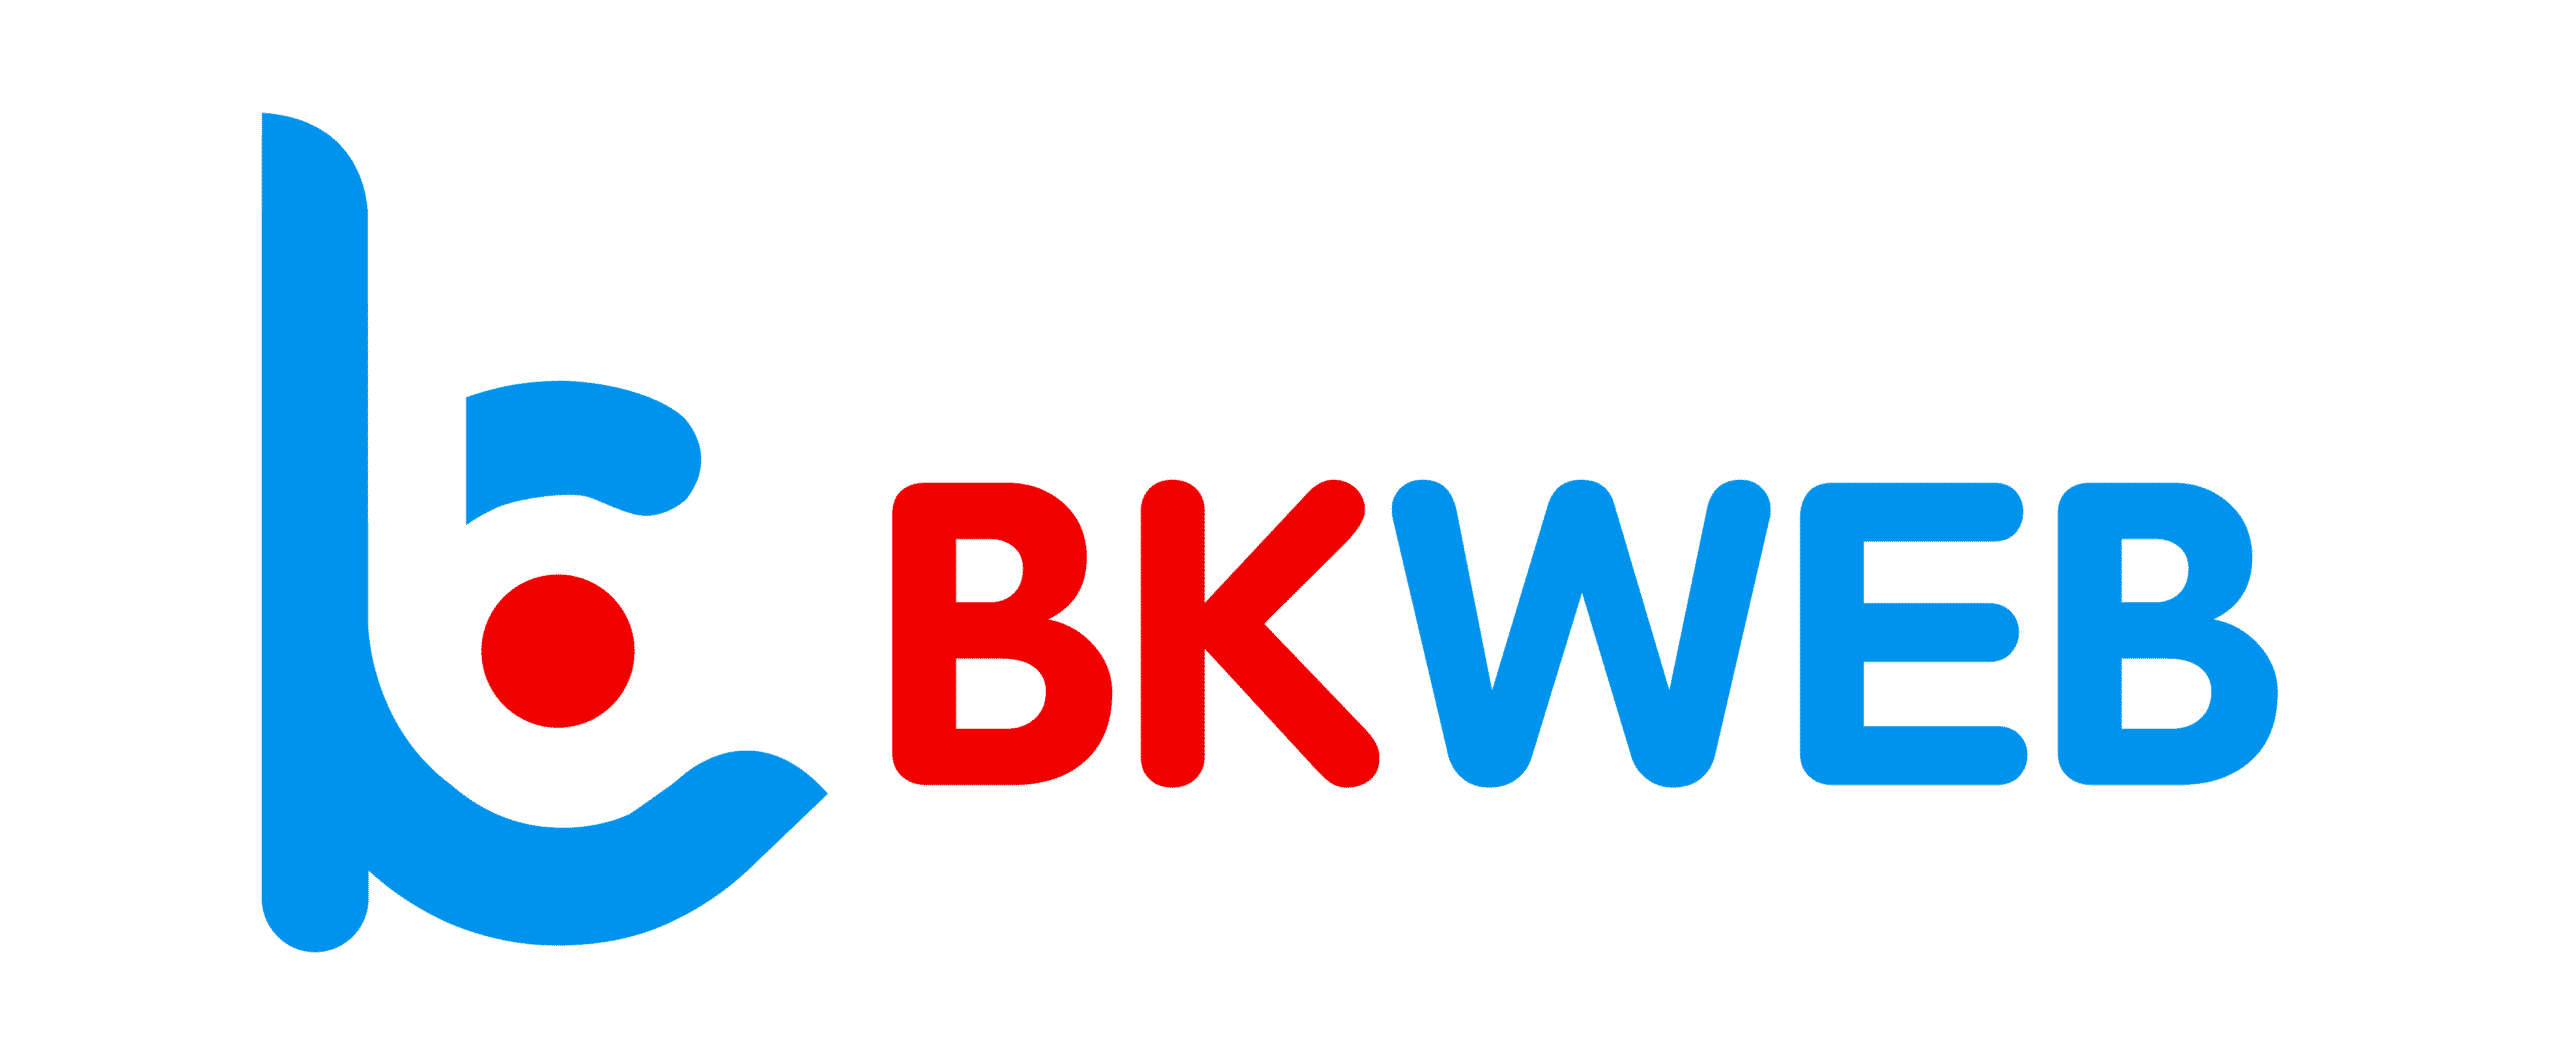 Thiết kế website chuyên nghiệp, chuẩn SEO – BKWEB